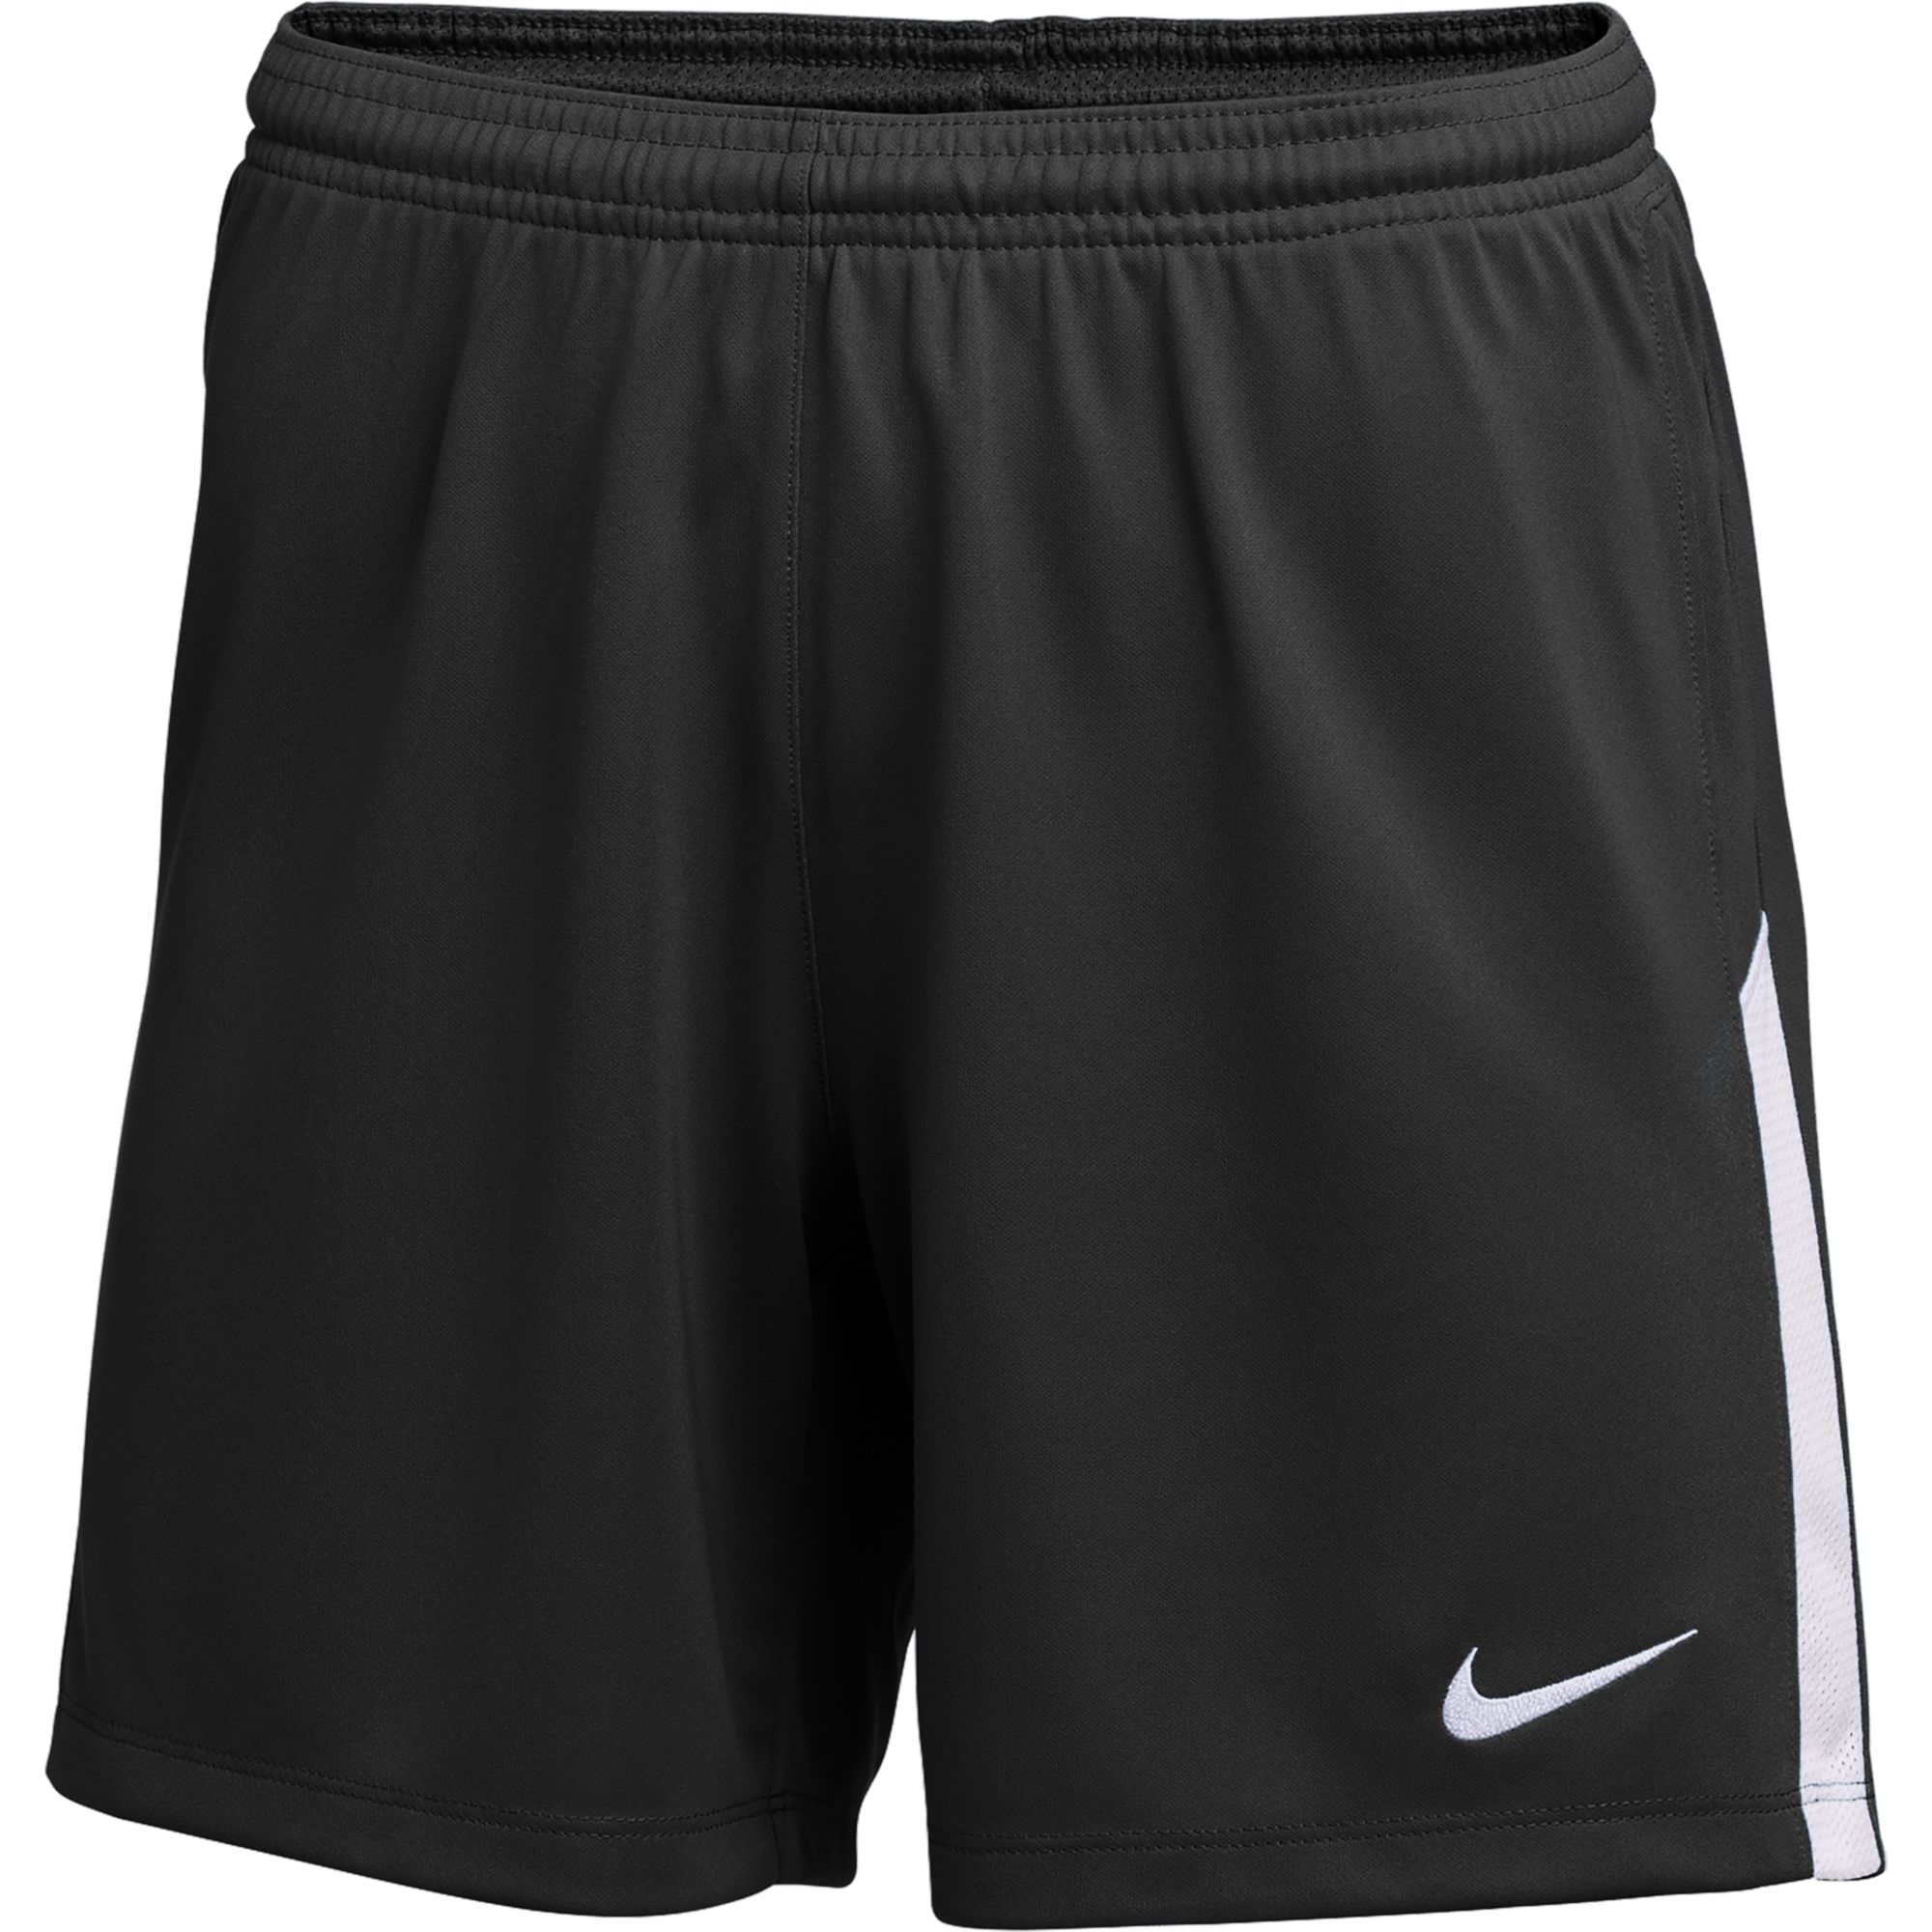 sobrino Activar Ellos Stefans Soccer - Wisconsin - Nike Women's Dri-FIT Knit II Soccer Shorts -  Black / White